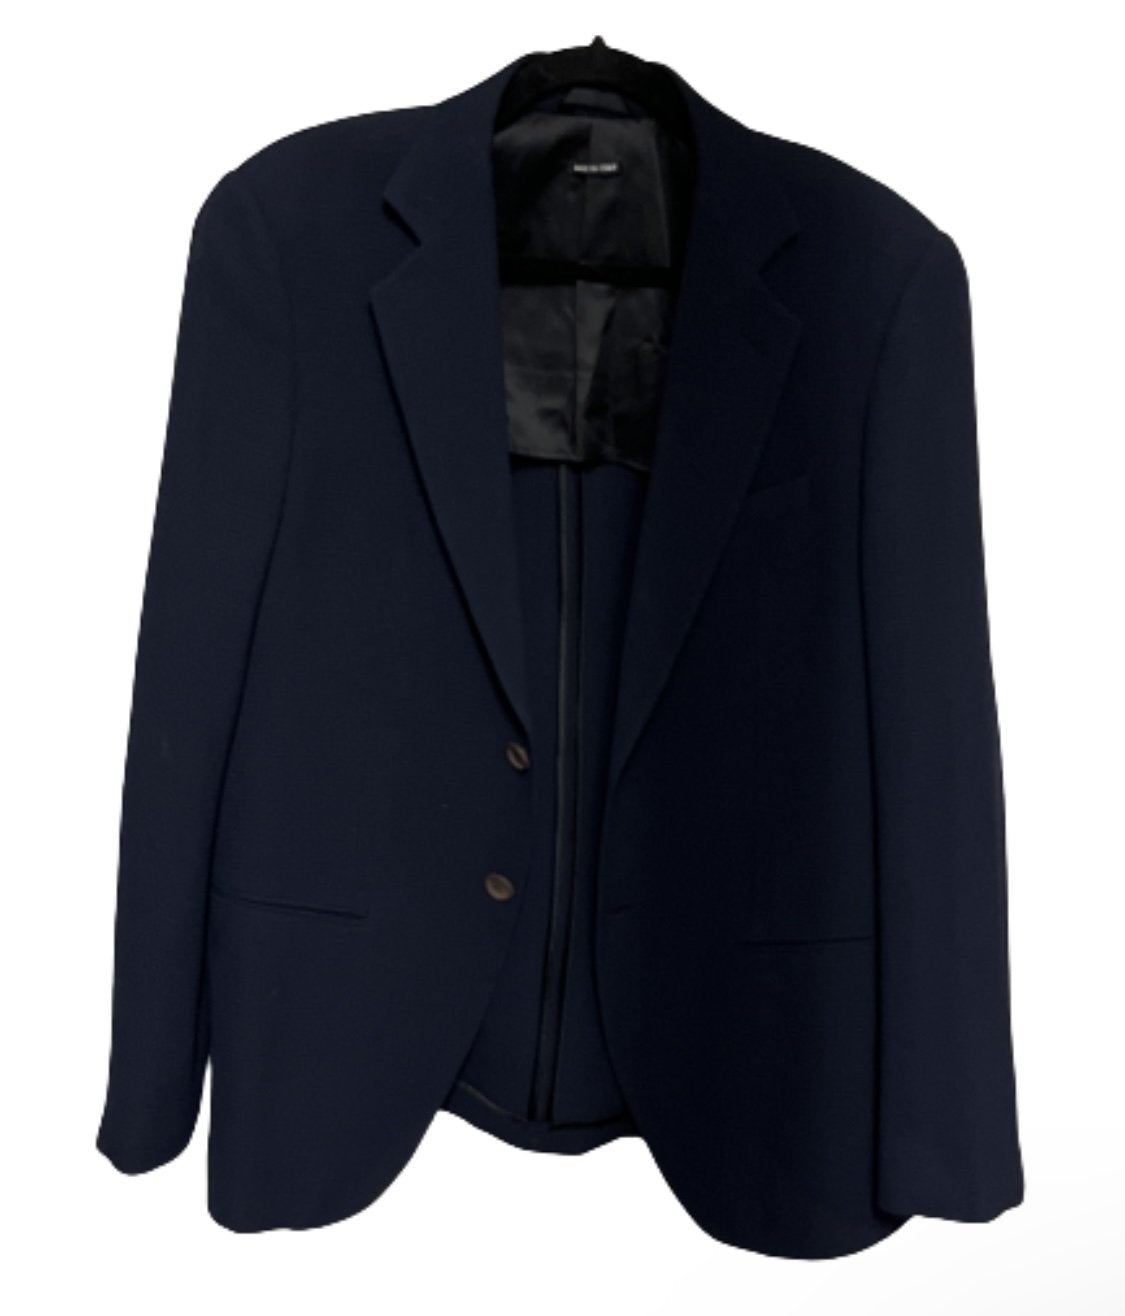 BONES: Agent Booth's Blue GIORGIO ARMANI Italian Made Jacket